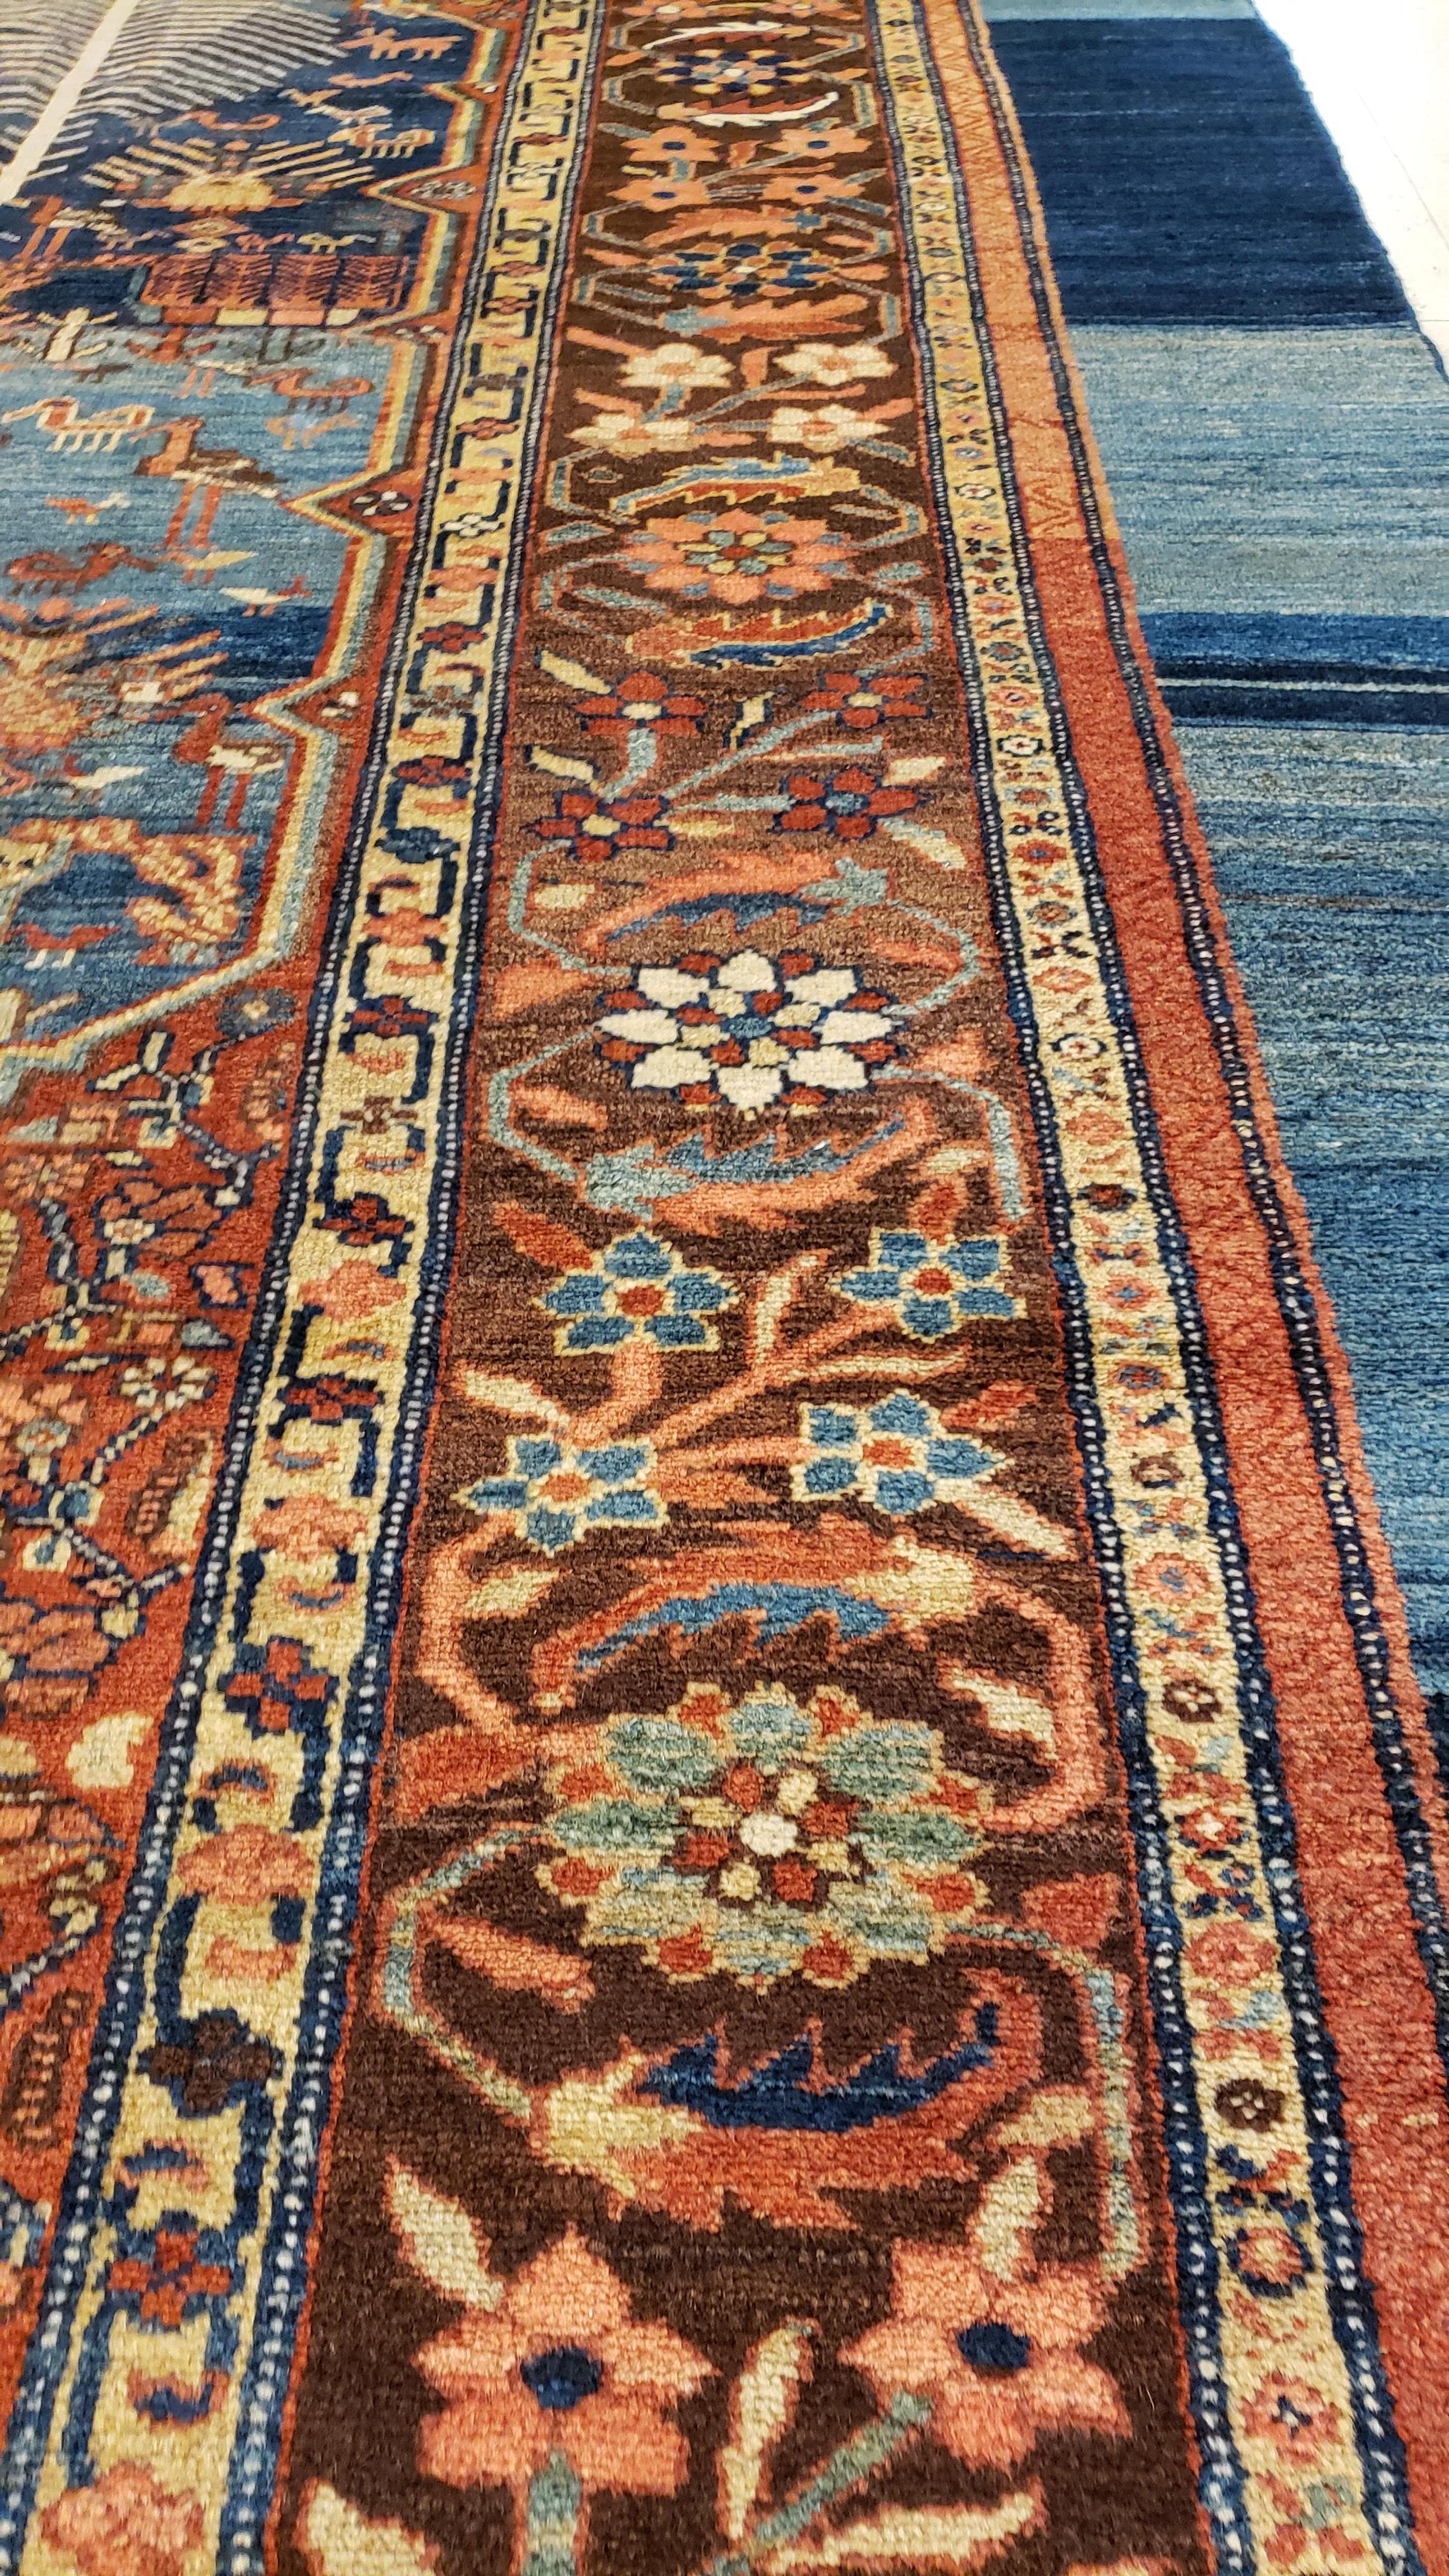 19th Century Antique Bakshaish Carpet, Oriental Persian Handmade in Light Blue, Rust and Gold For Sale